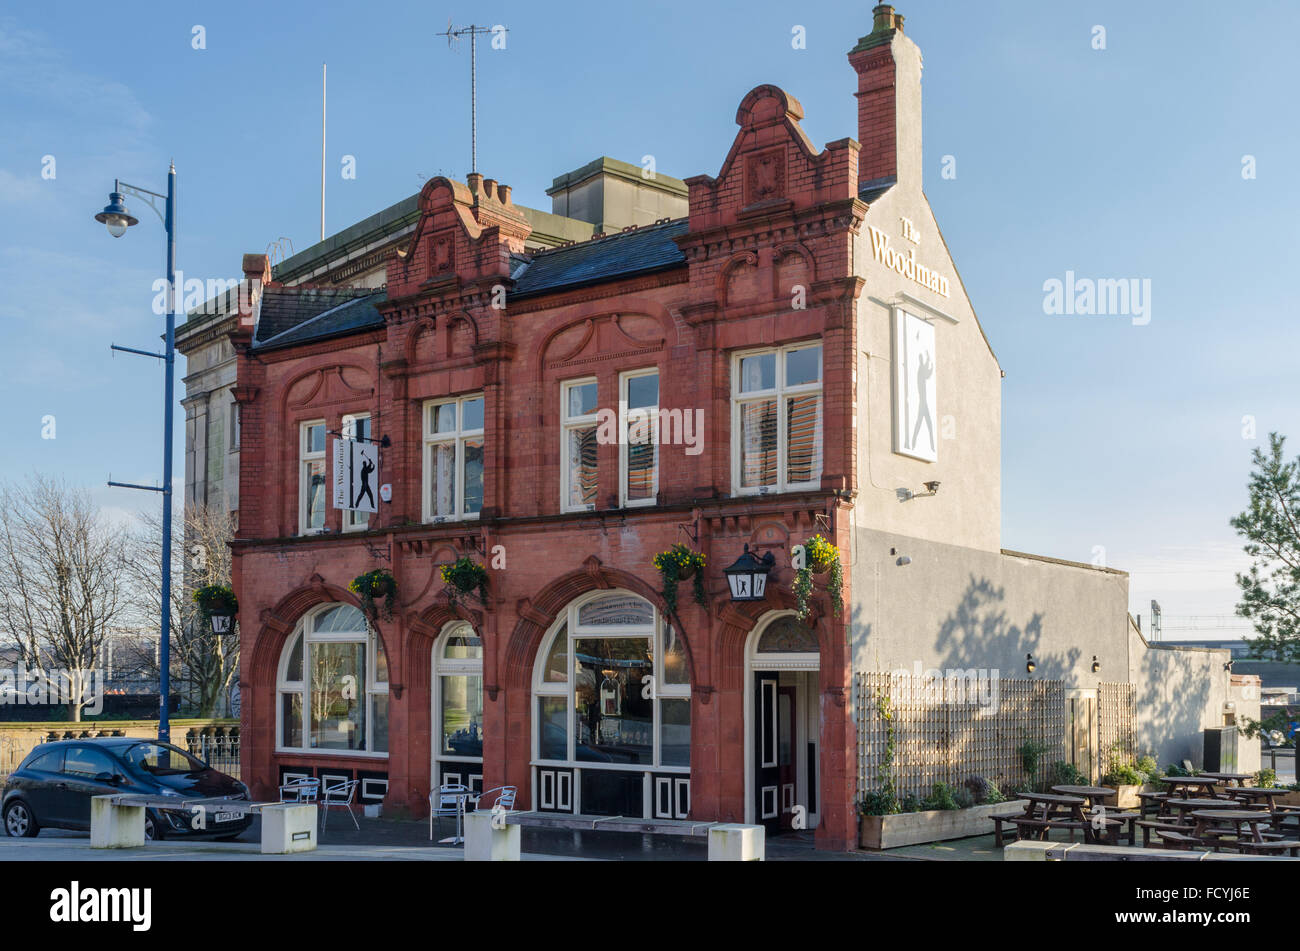 The Woodman pub in New Canal Street in Birmingham's Eastside Stock Photo